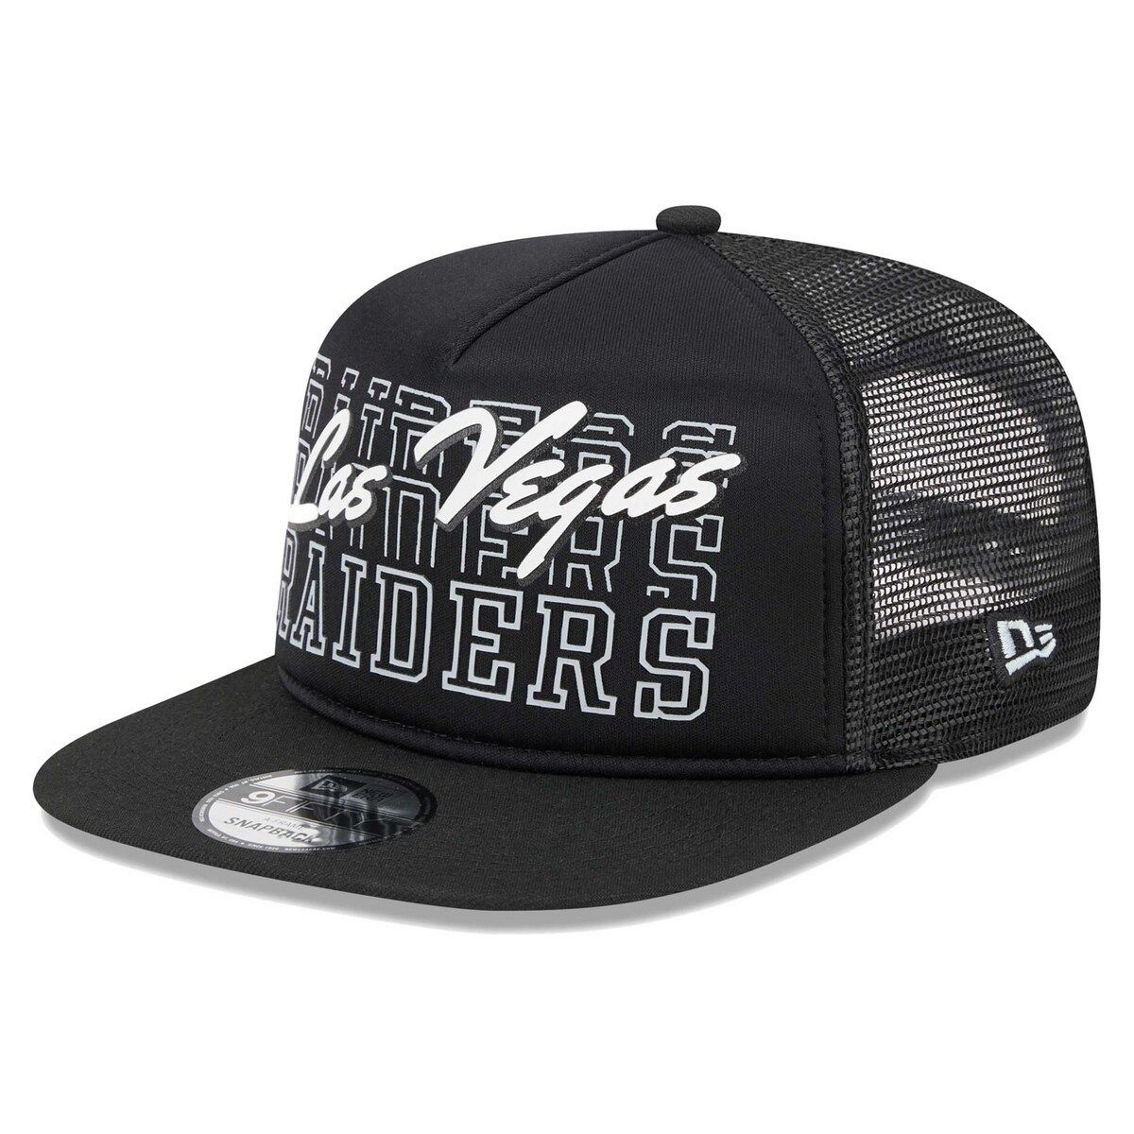 New Era Men's Black Las Vegas Raiders Instant Replay 9FIFTY Snapback Hat - Image 4 of 4